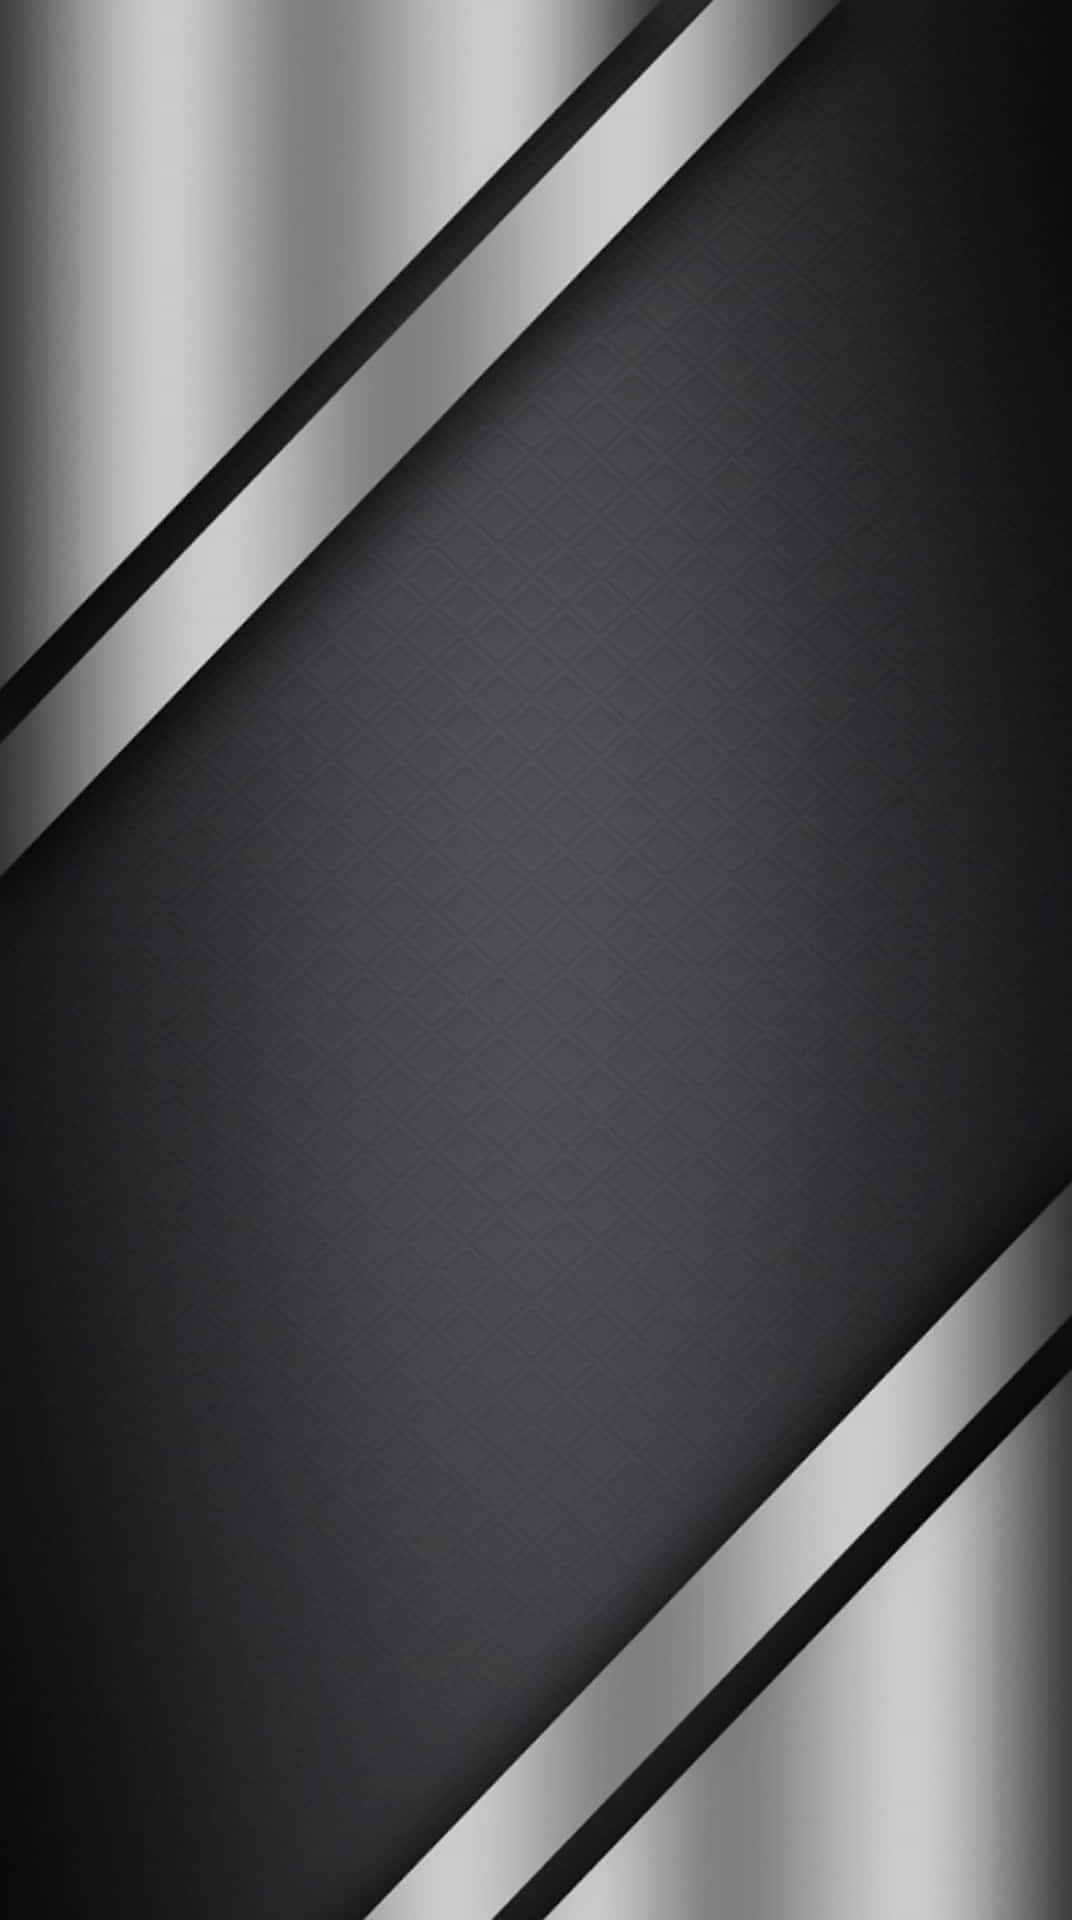 Black Silver Background Images  Free Download on Freepik